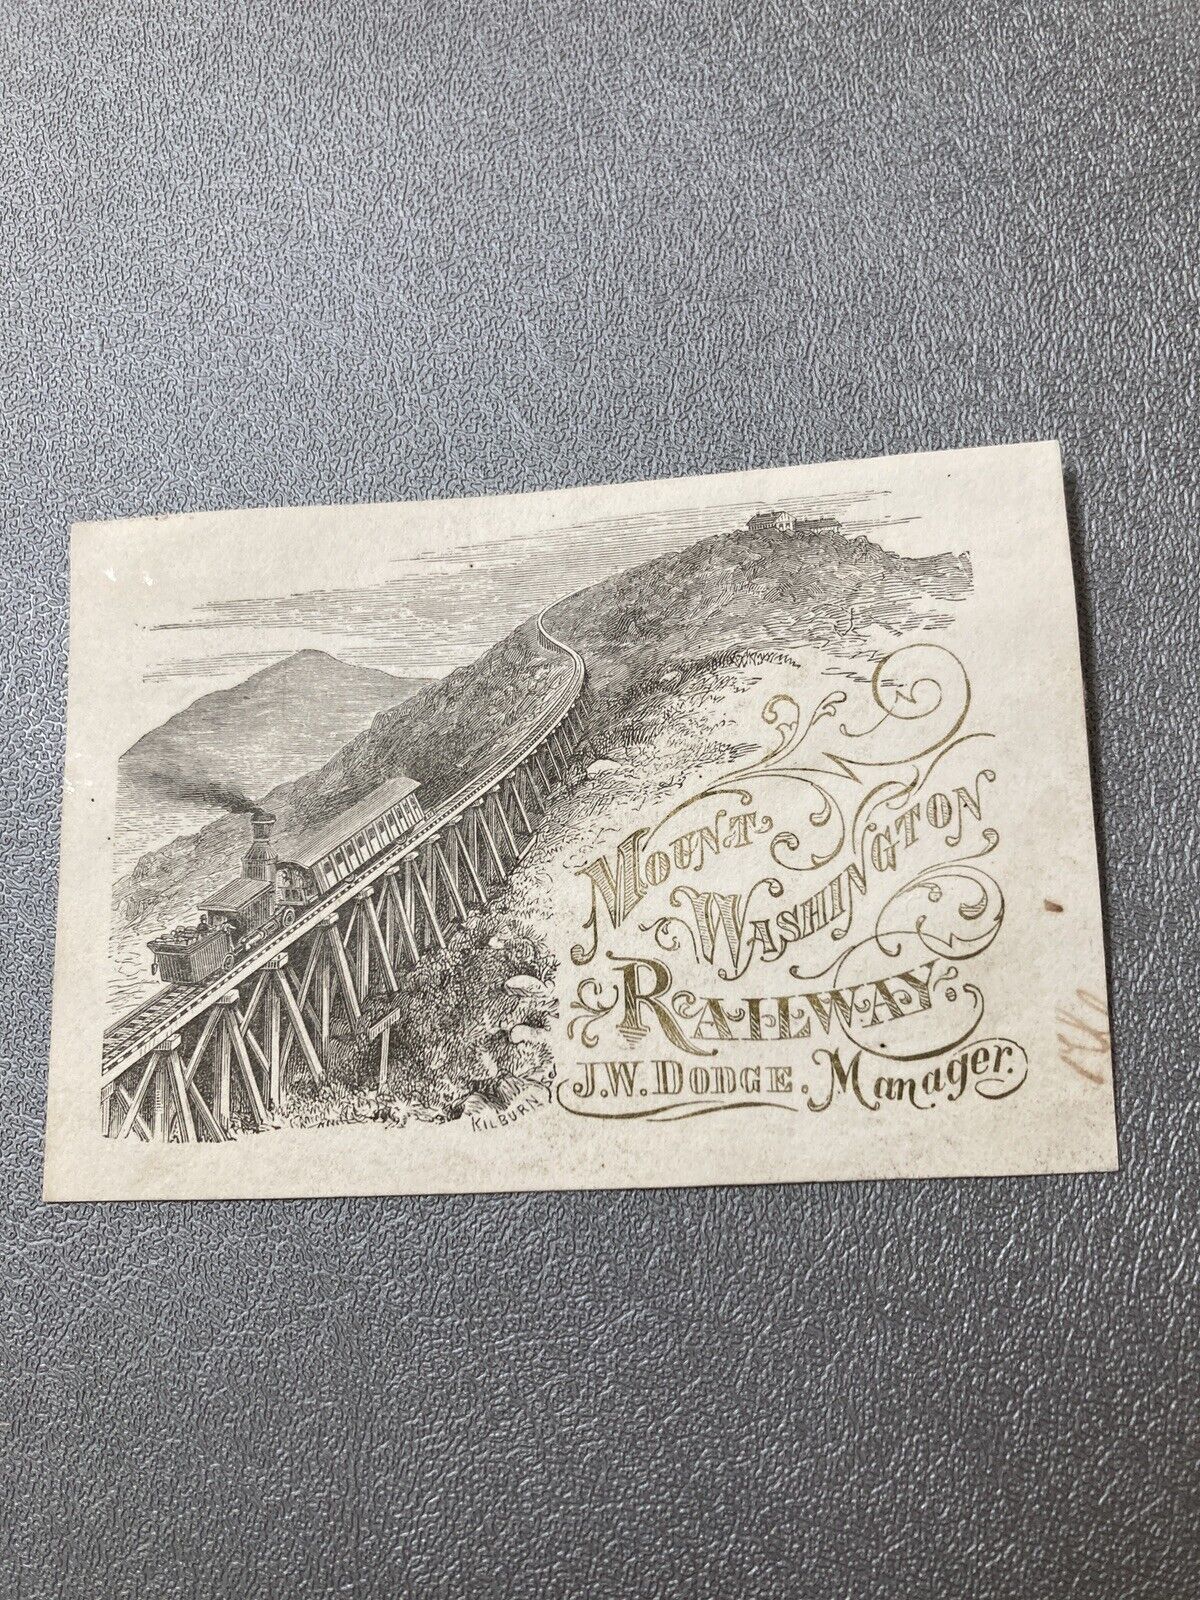 19th C Mount Washington, NH Cog Railway Card Published By Kilburn